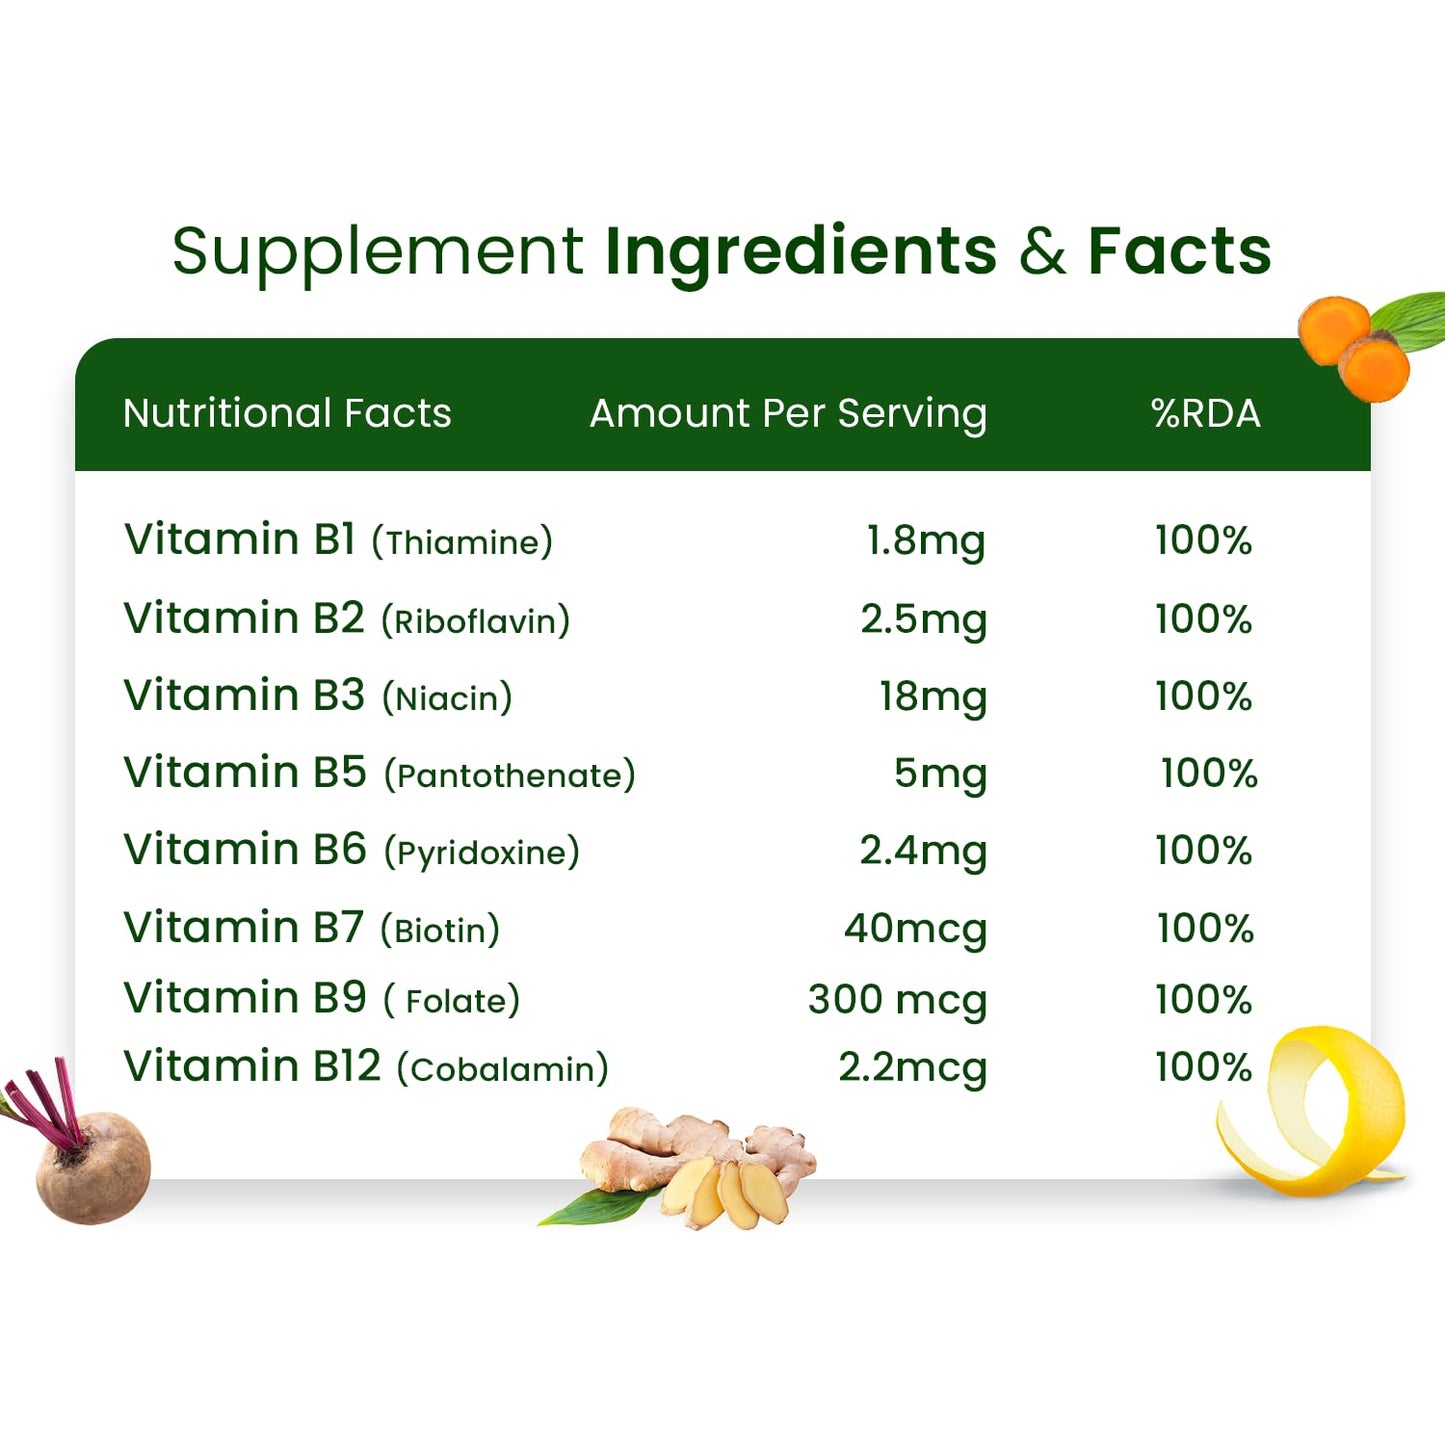 Himalayan Organics Plant-Based Vitamin B Complex with 100% RDA B1, B2, B3, B5, B6, B9 & B12 | Hair Growth, Boost Energy And Immunity - 30 Veg Capsules